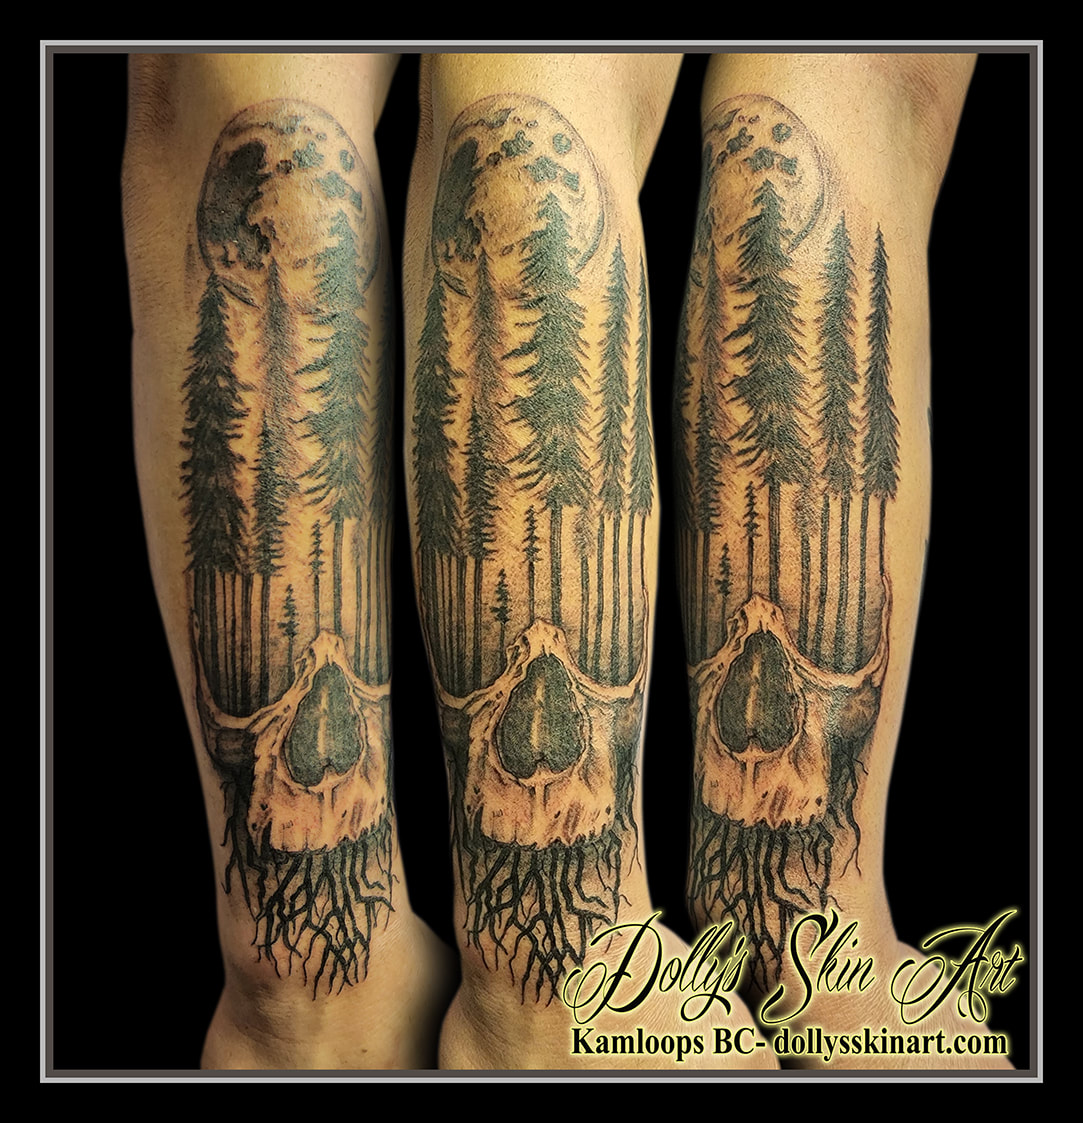 skull trees tattoo moon roots black and grey shading arm tattoo dolly's skin art kamloops